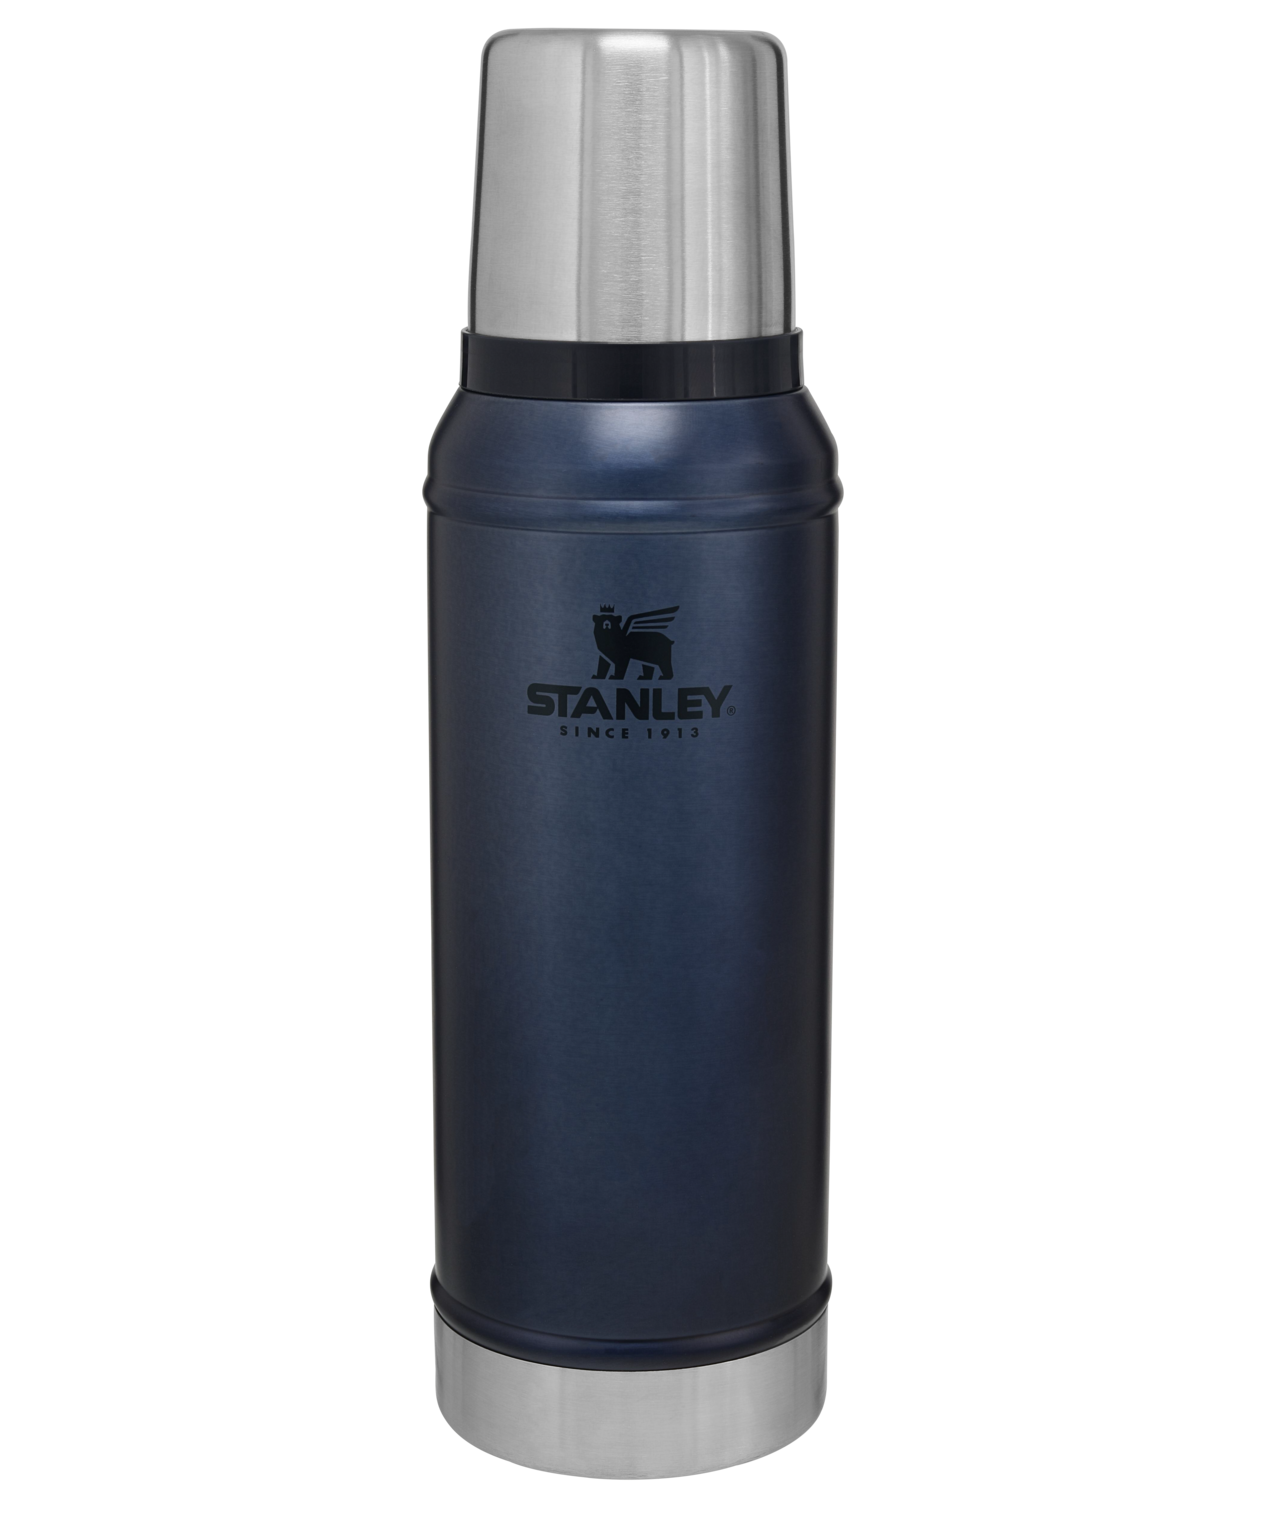 Stanley Classic Legendary Bottle 1QT - Nightfall front